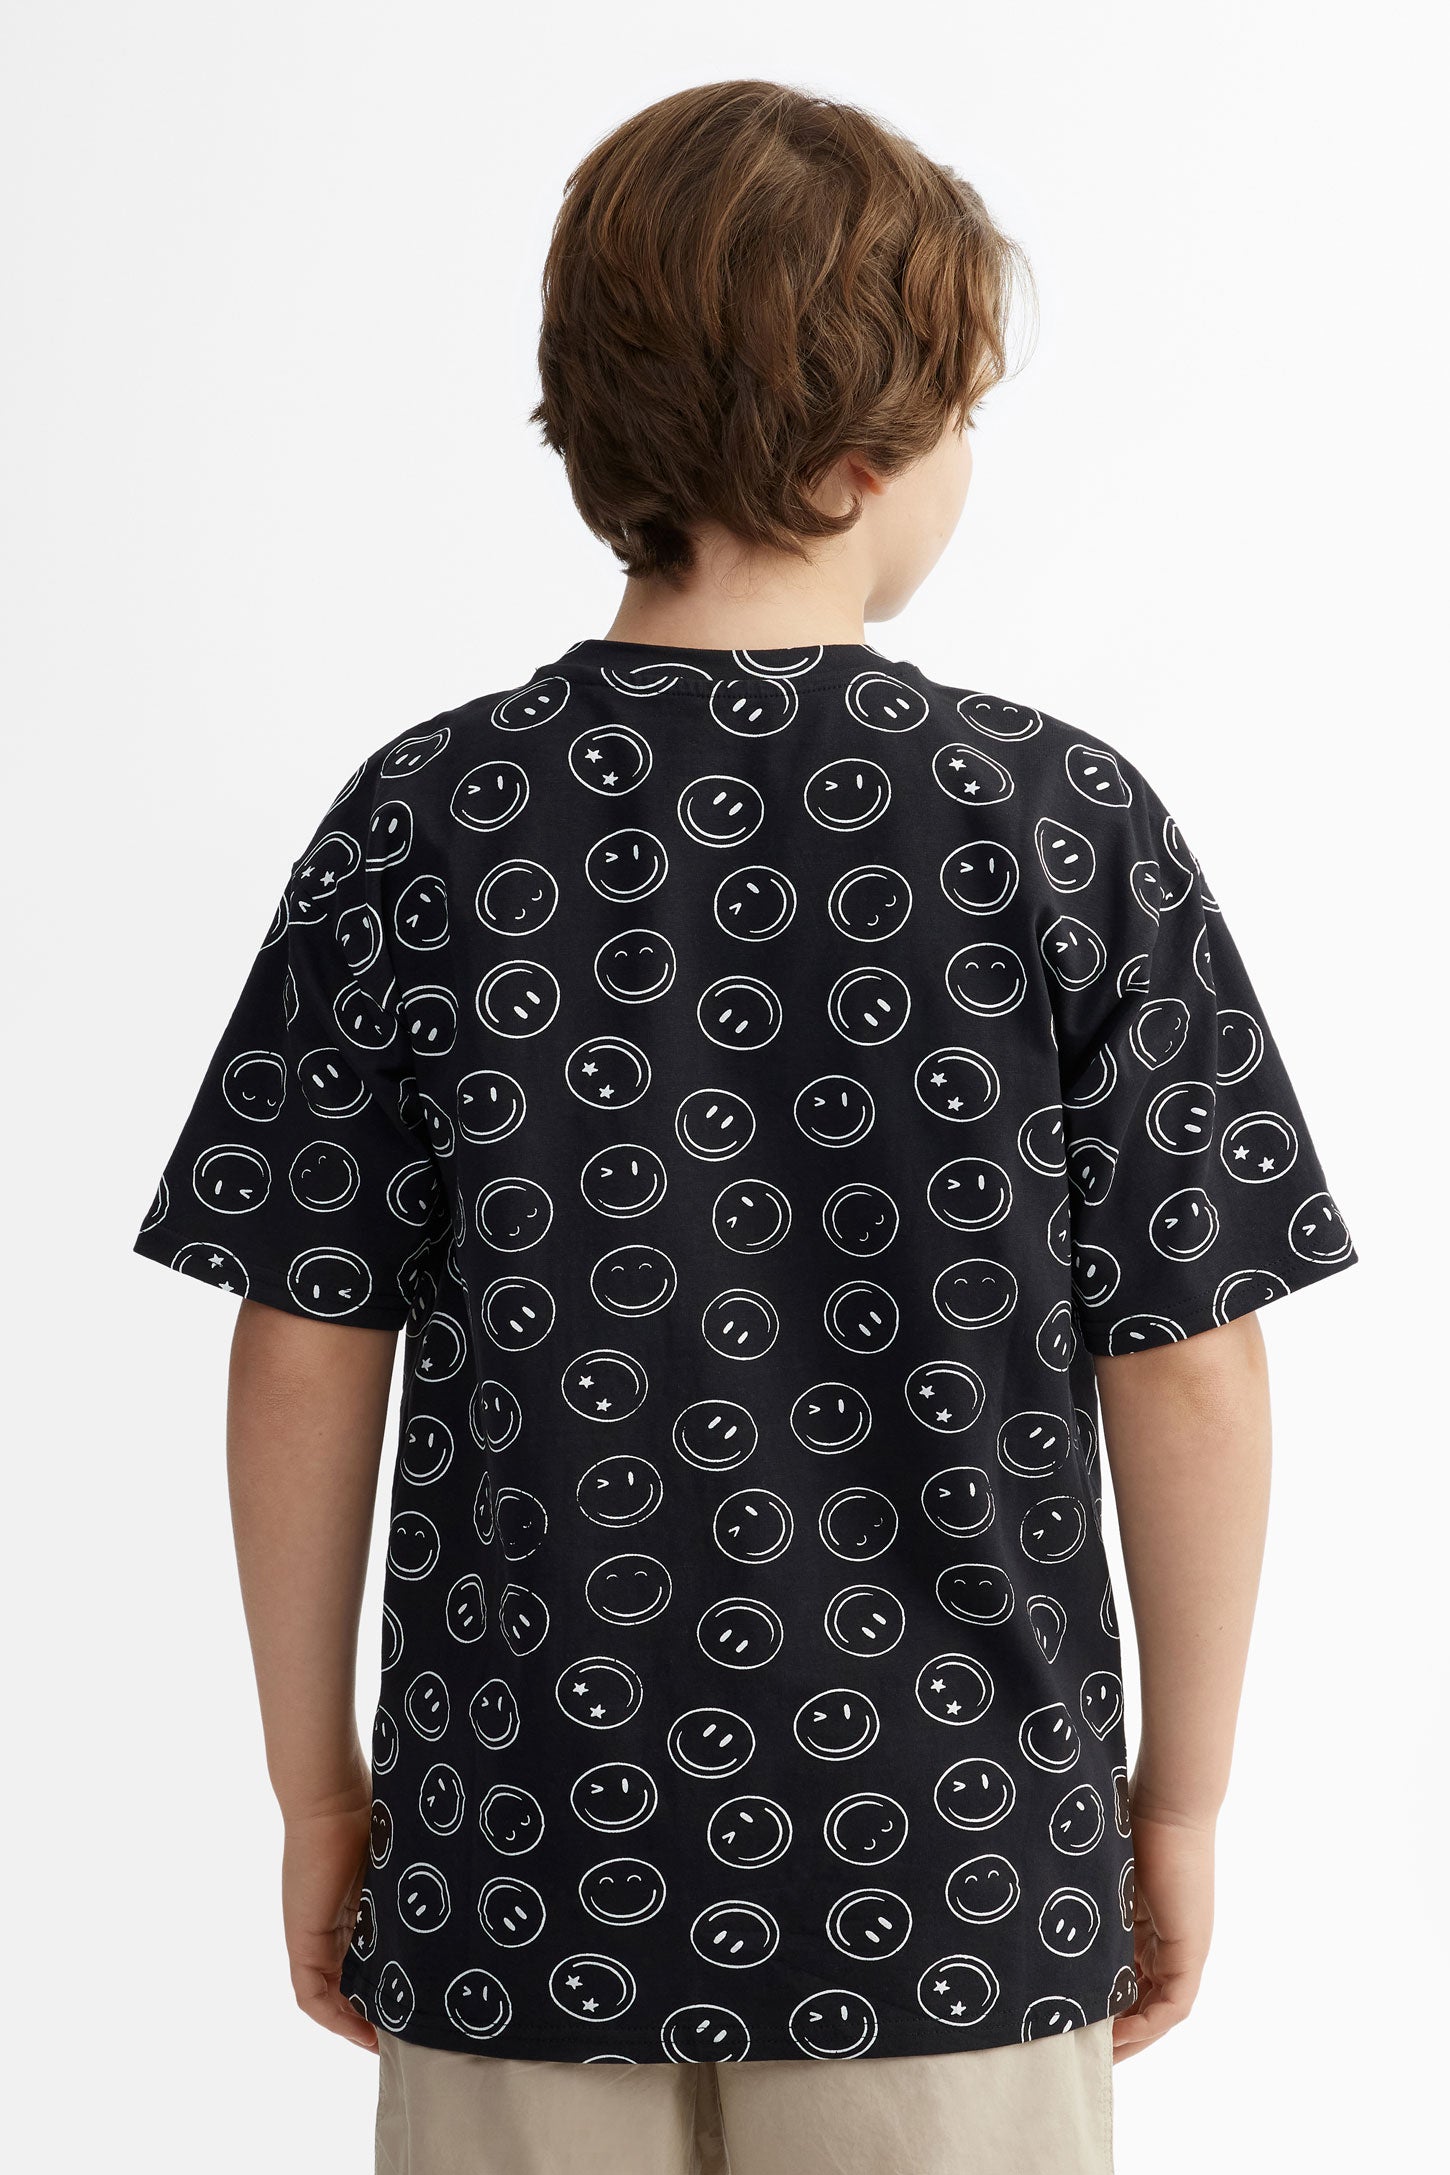 T-shirt imprimé en coton, 2/25$ - Ado garçon && NOIR/MULTI